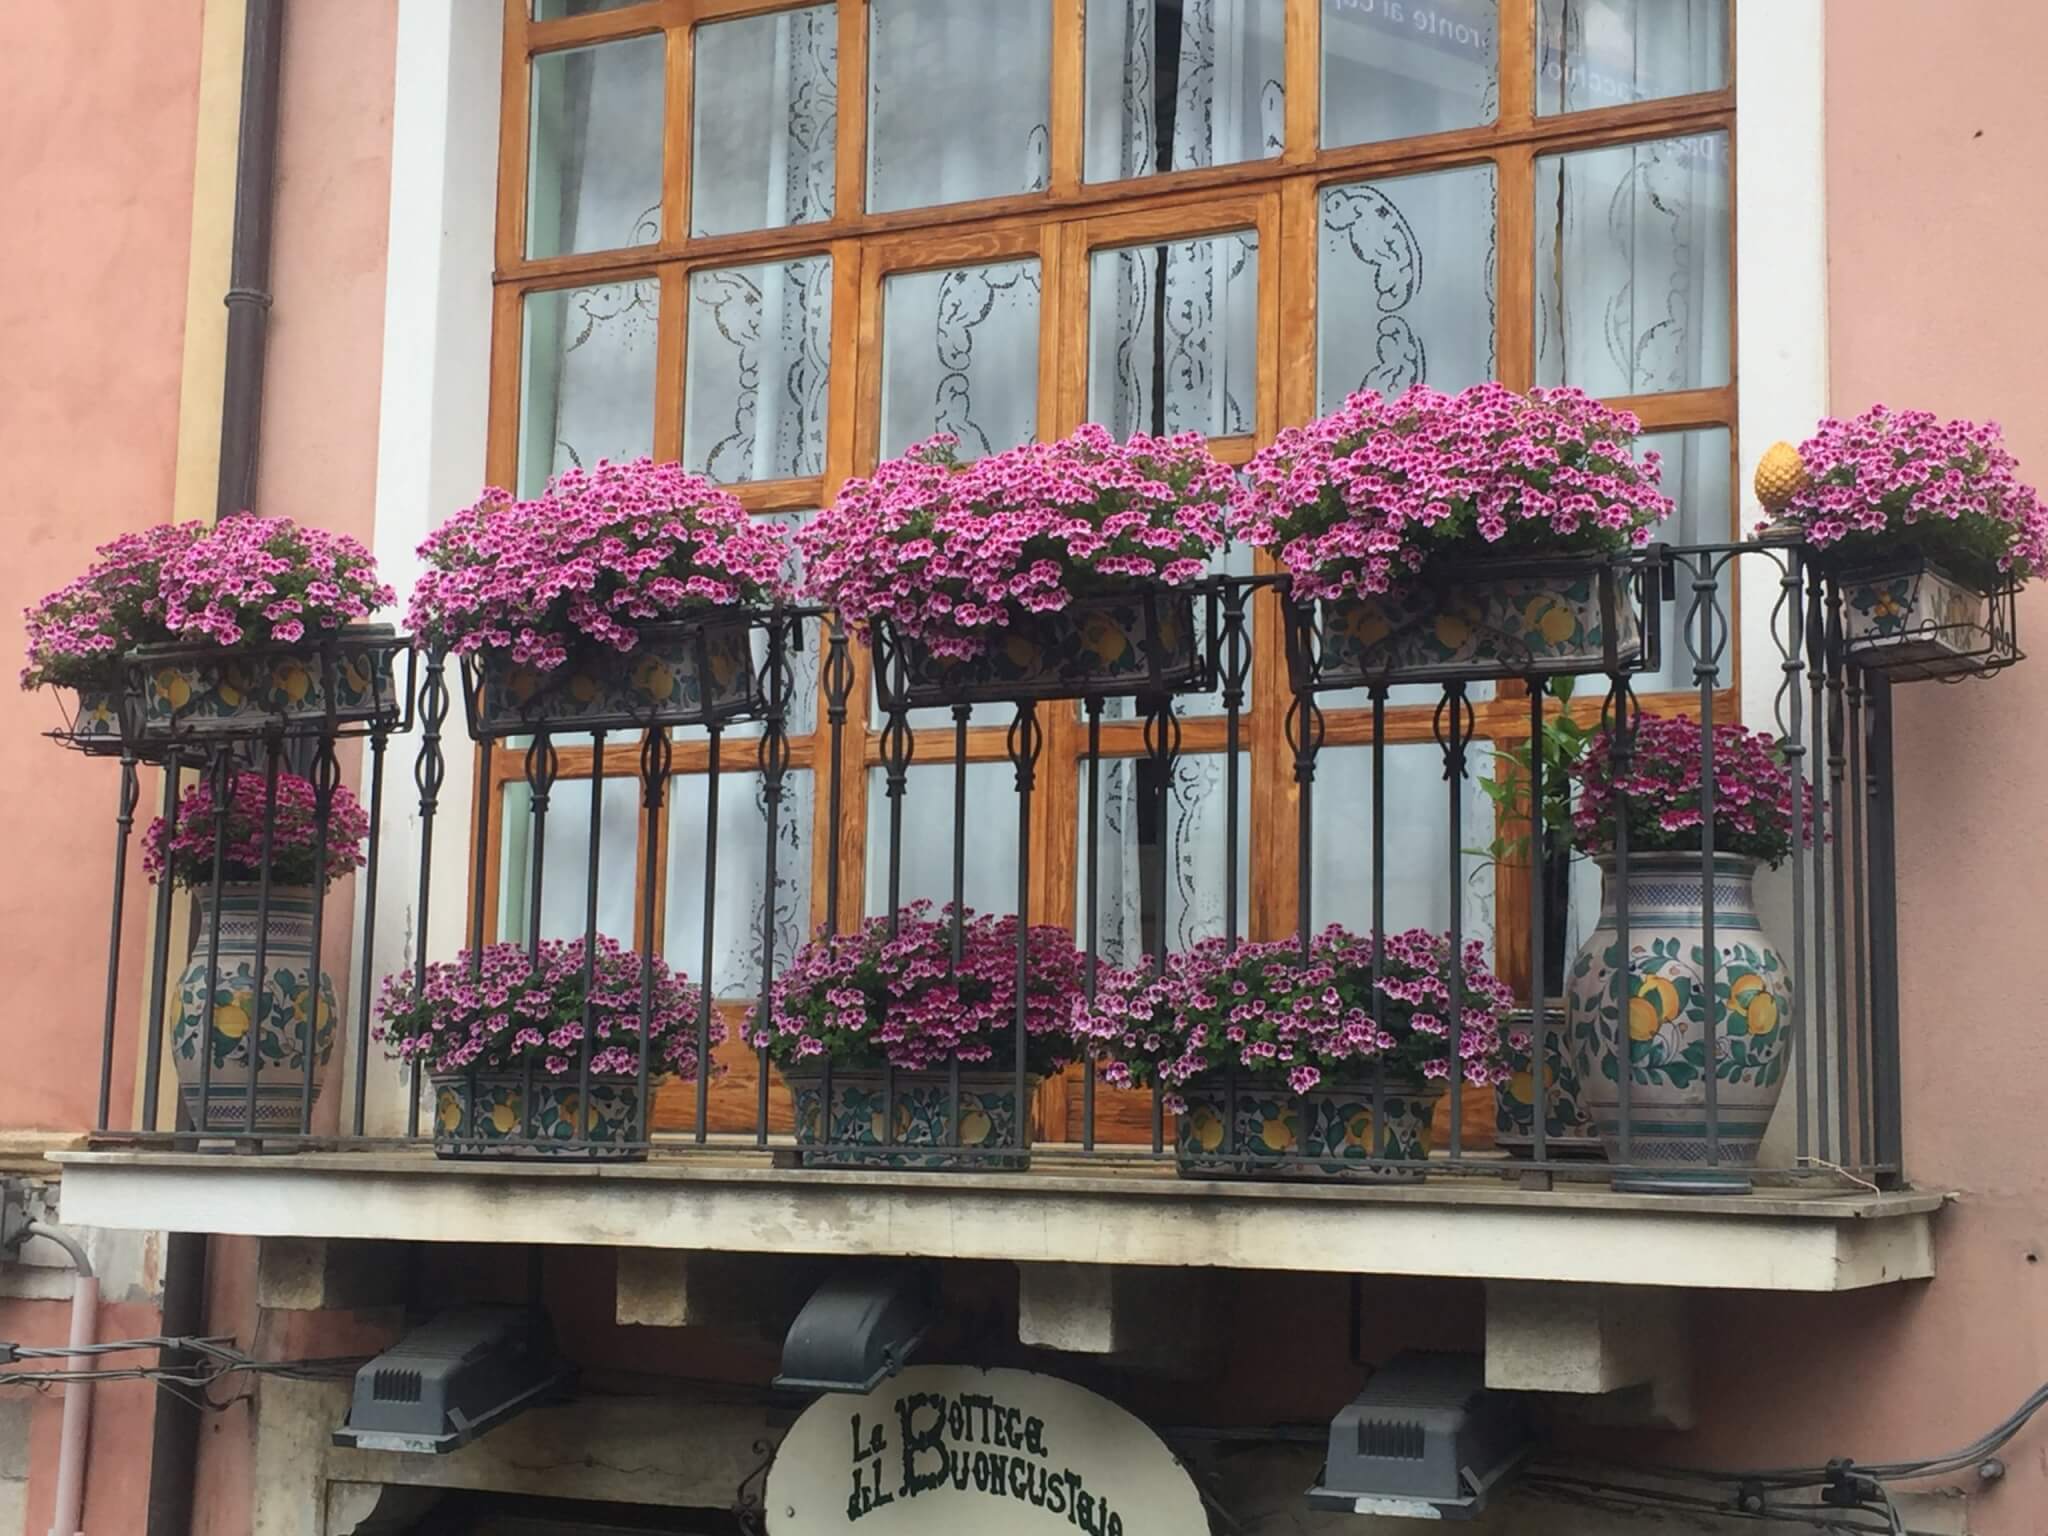 Dreaming of Italian balconies